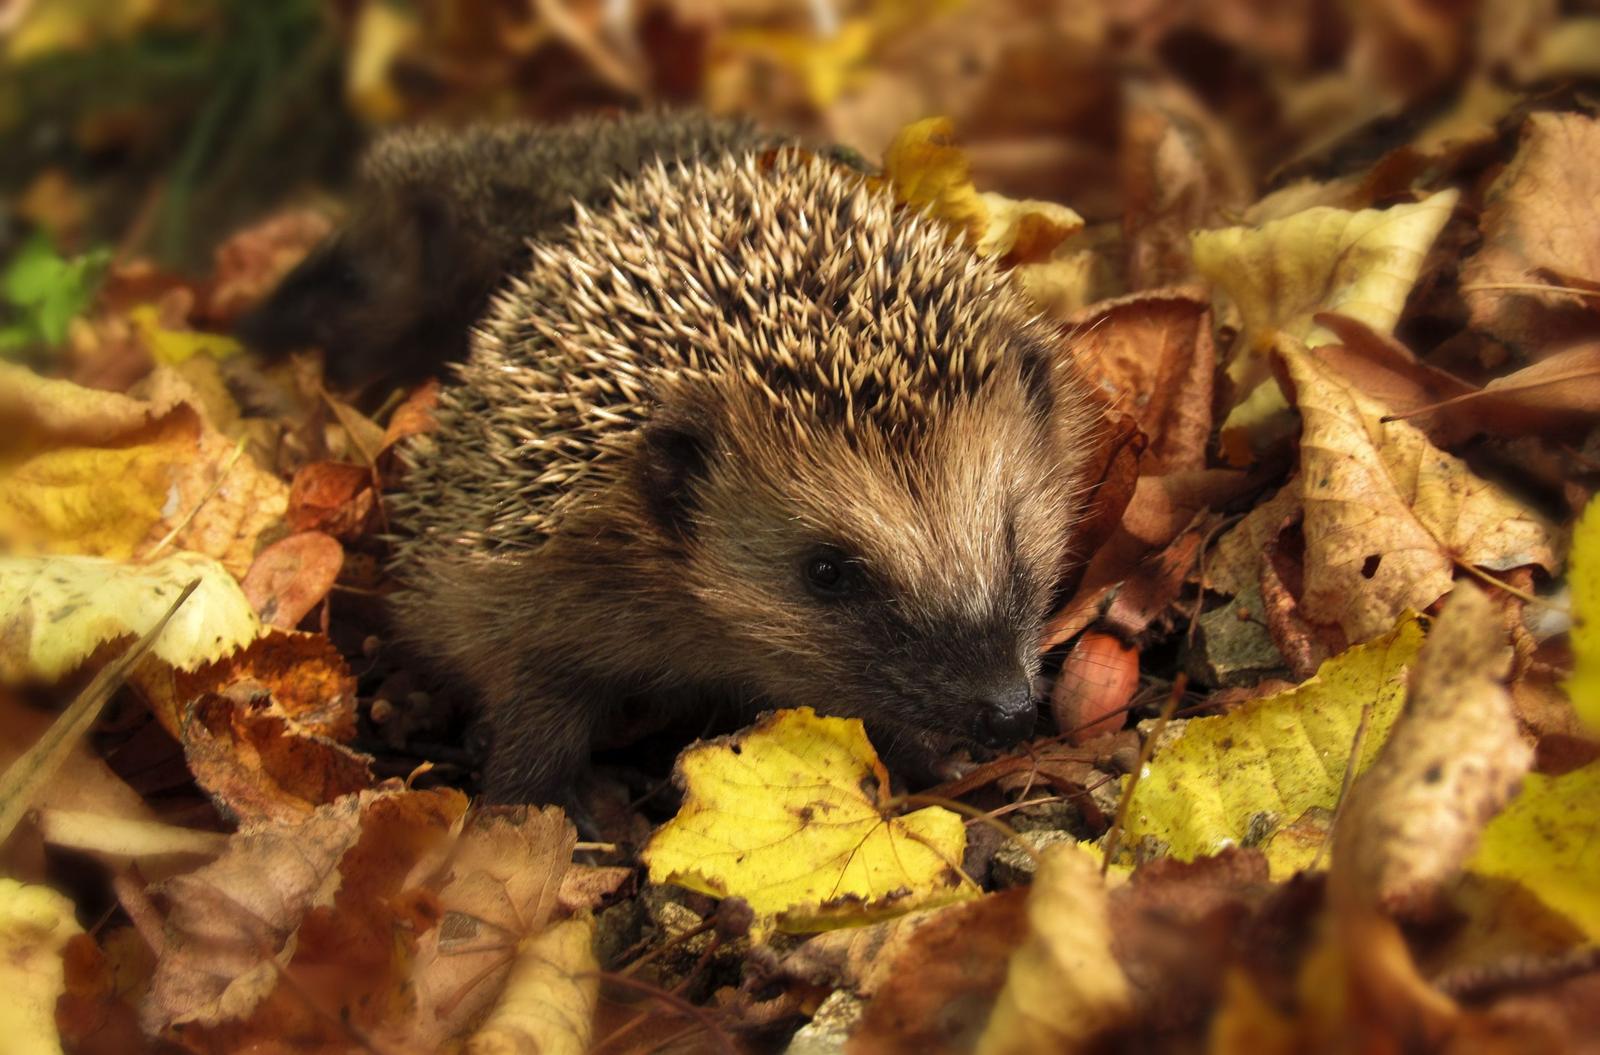 Hedgehog amid some leaves